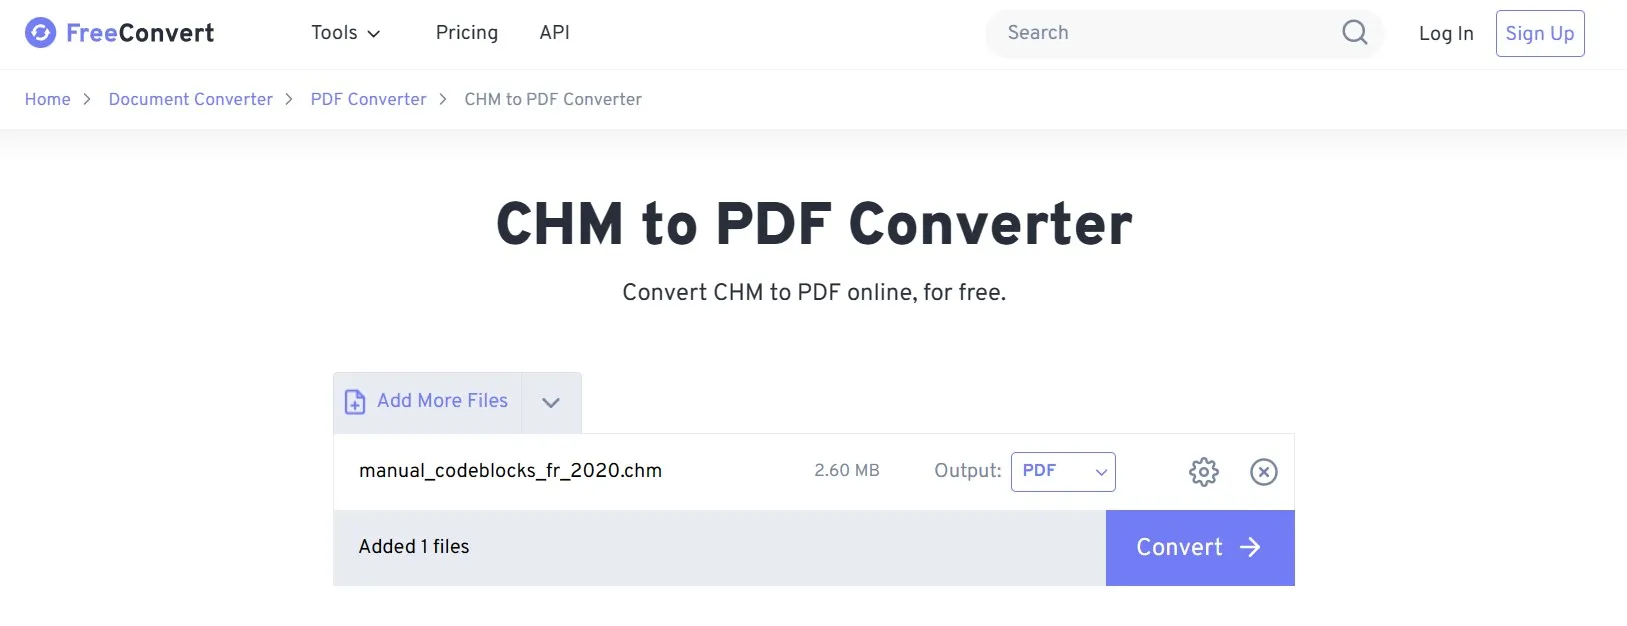 chm to pdf freeconvert download file